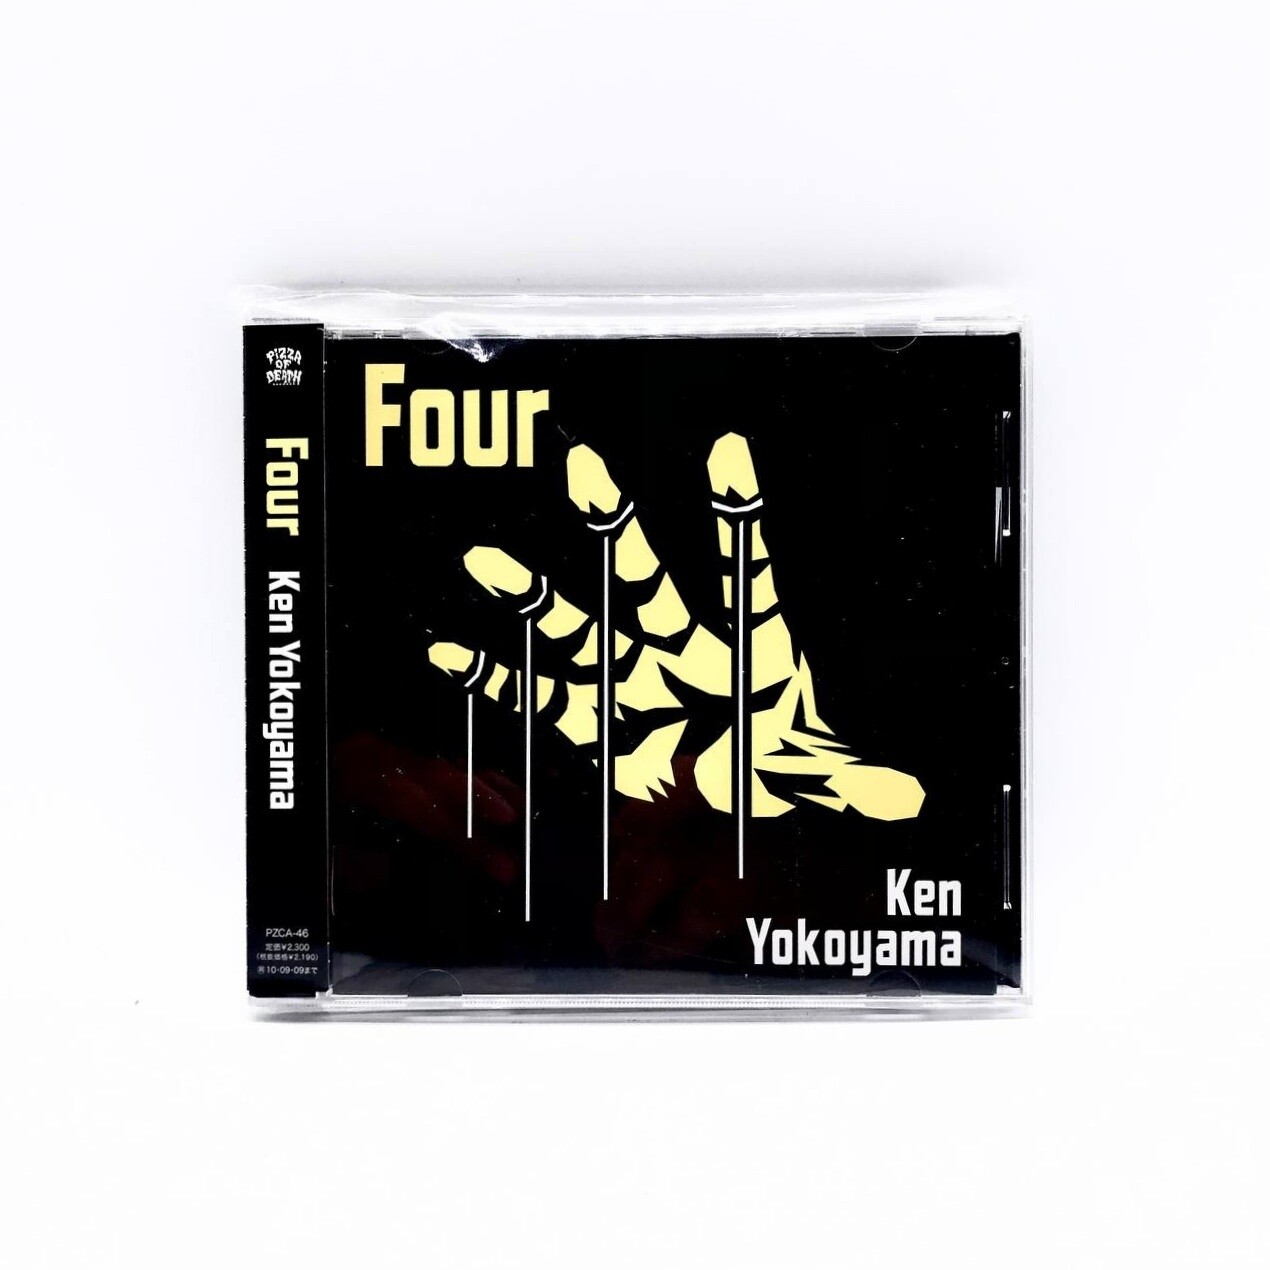 [USED] KEN YOKOYAMA -FOUR- CD (JAPAN PRESS)